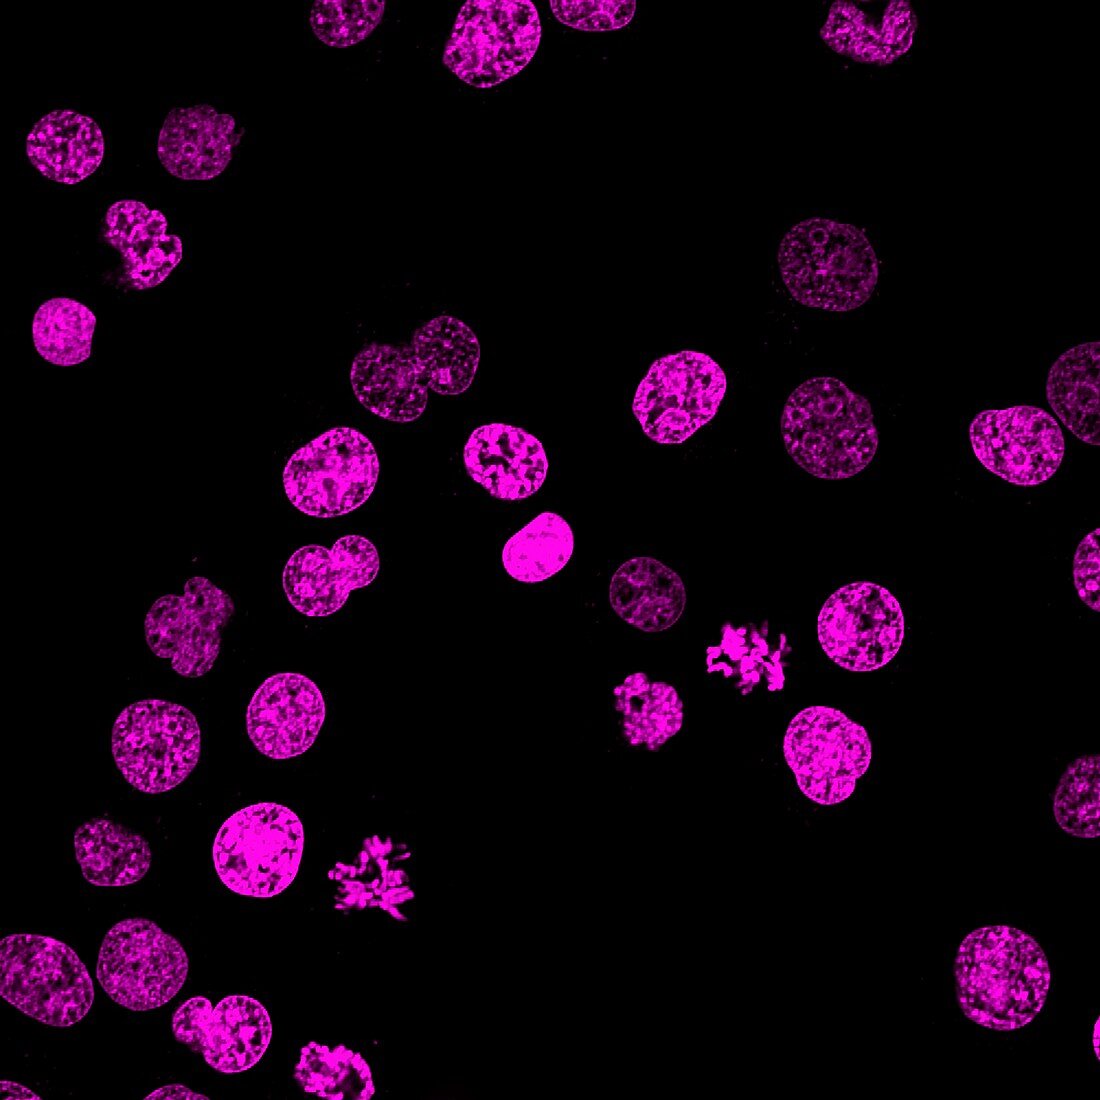 Leukaemia cancer cells, fluorescence light micrograph